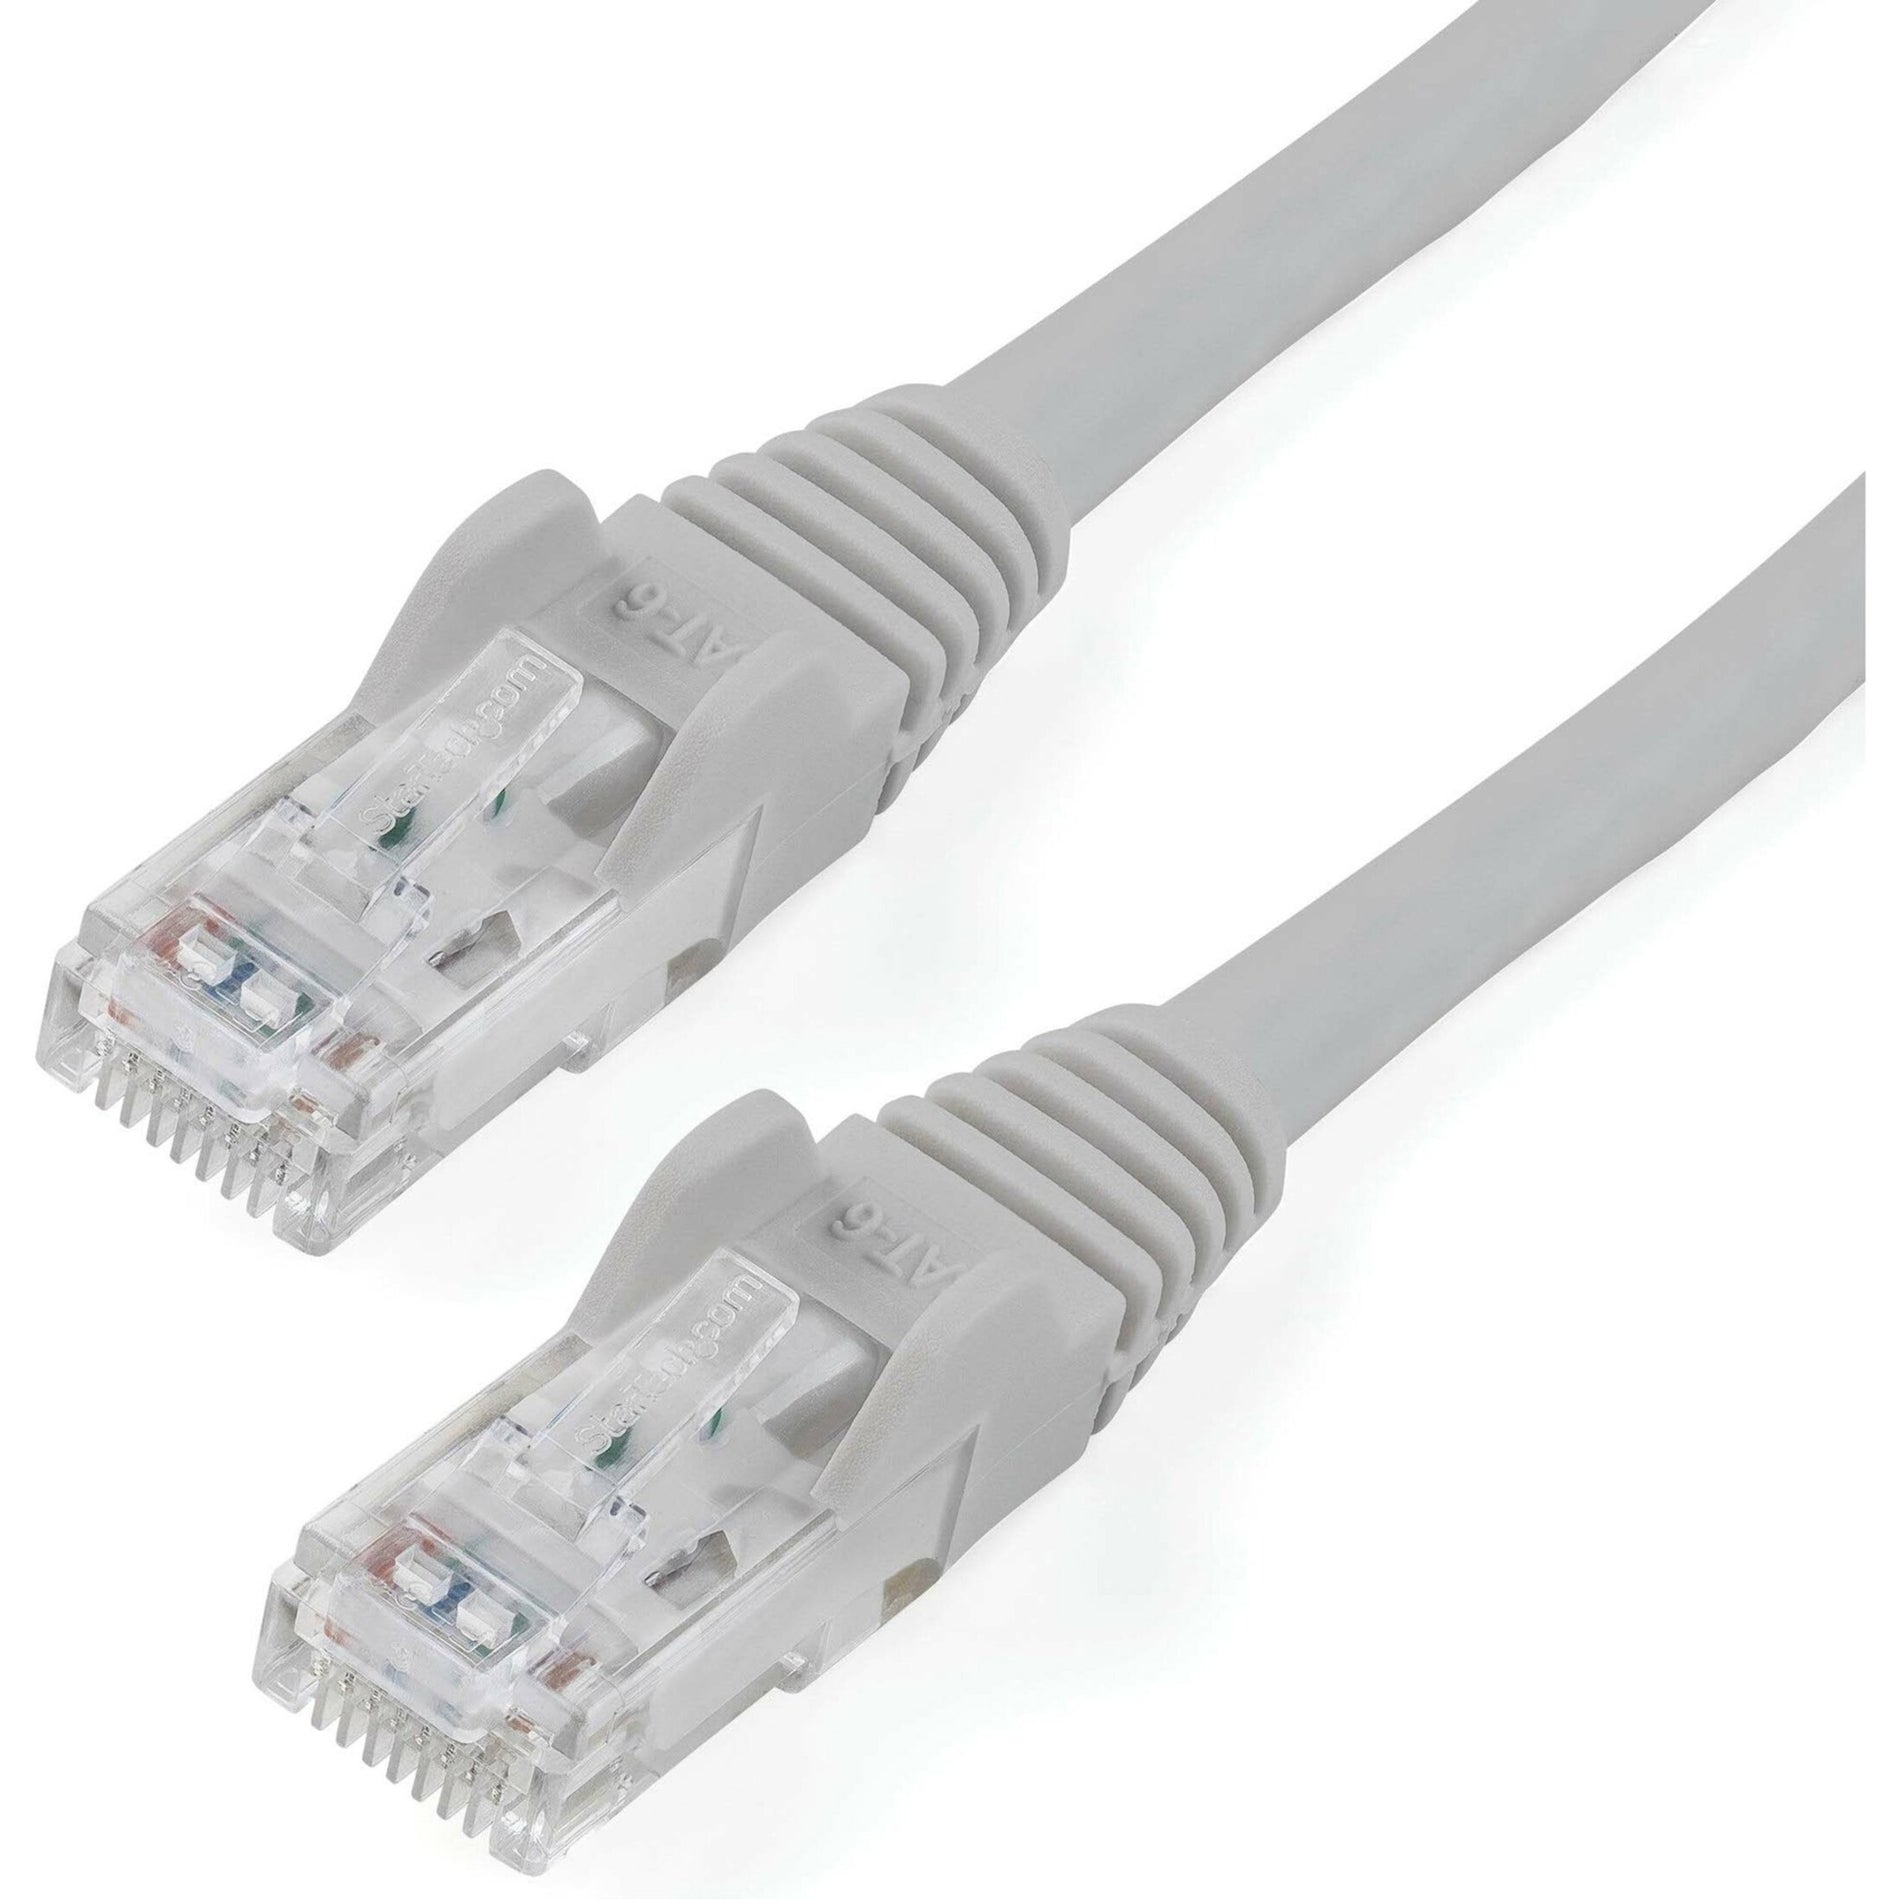 StarTech.com N6PATCH12GR Cat6 Patch Cable, 12ft Gray Ethernet Cable, Snagless RJ45 Connectors